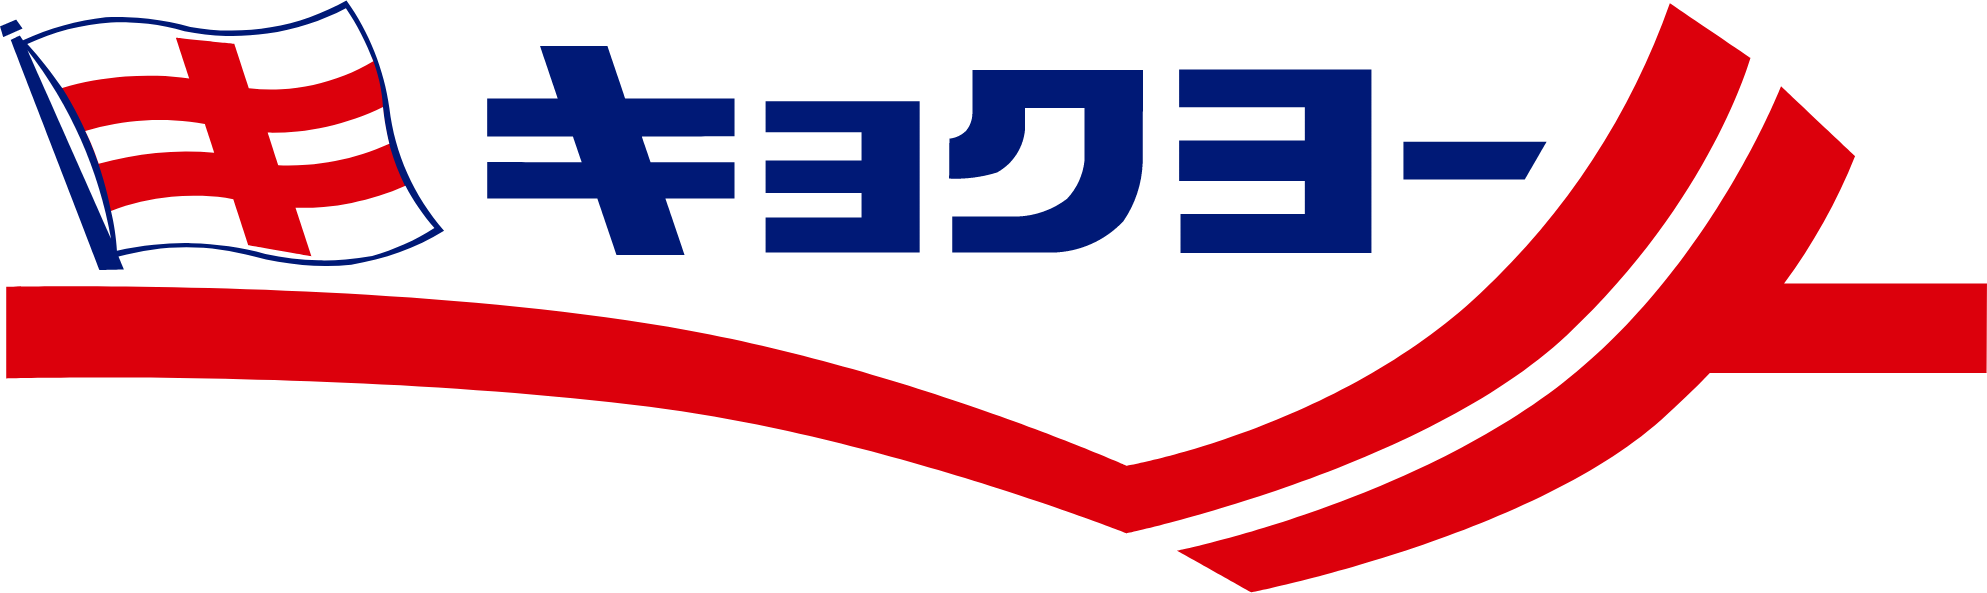 Kyokuyo logo large (transparent PNG)